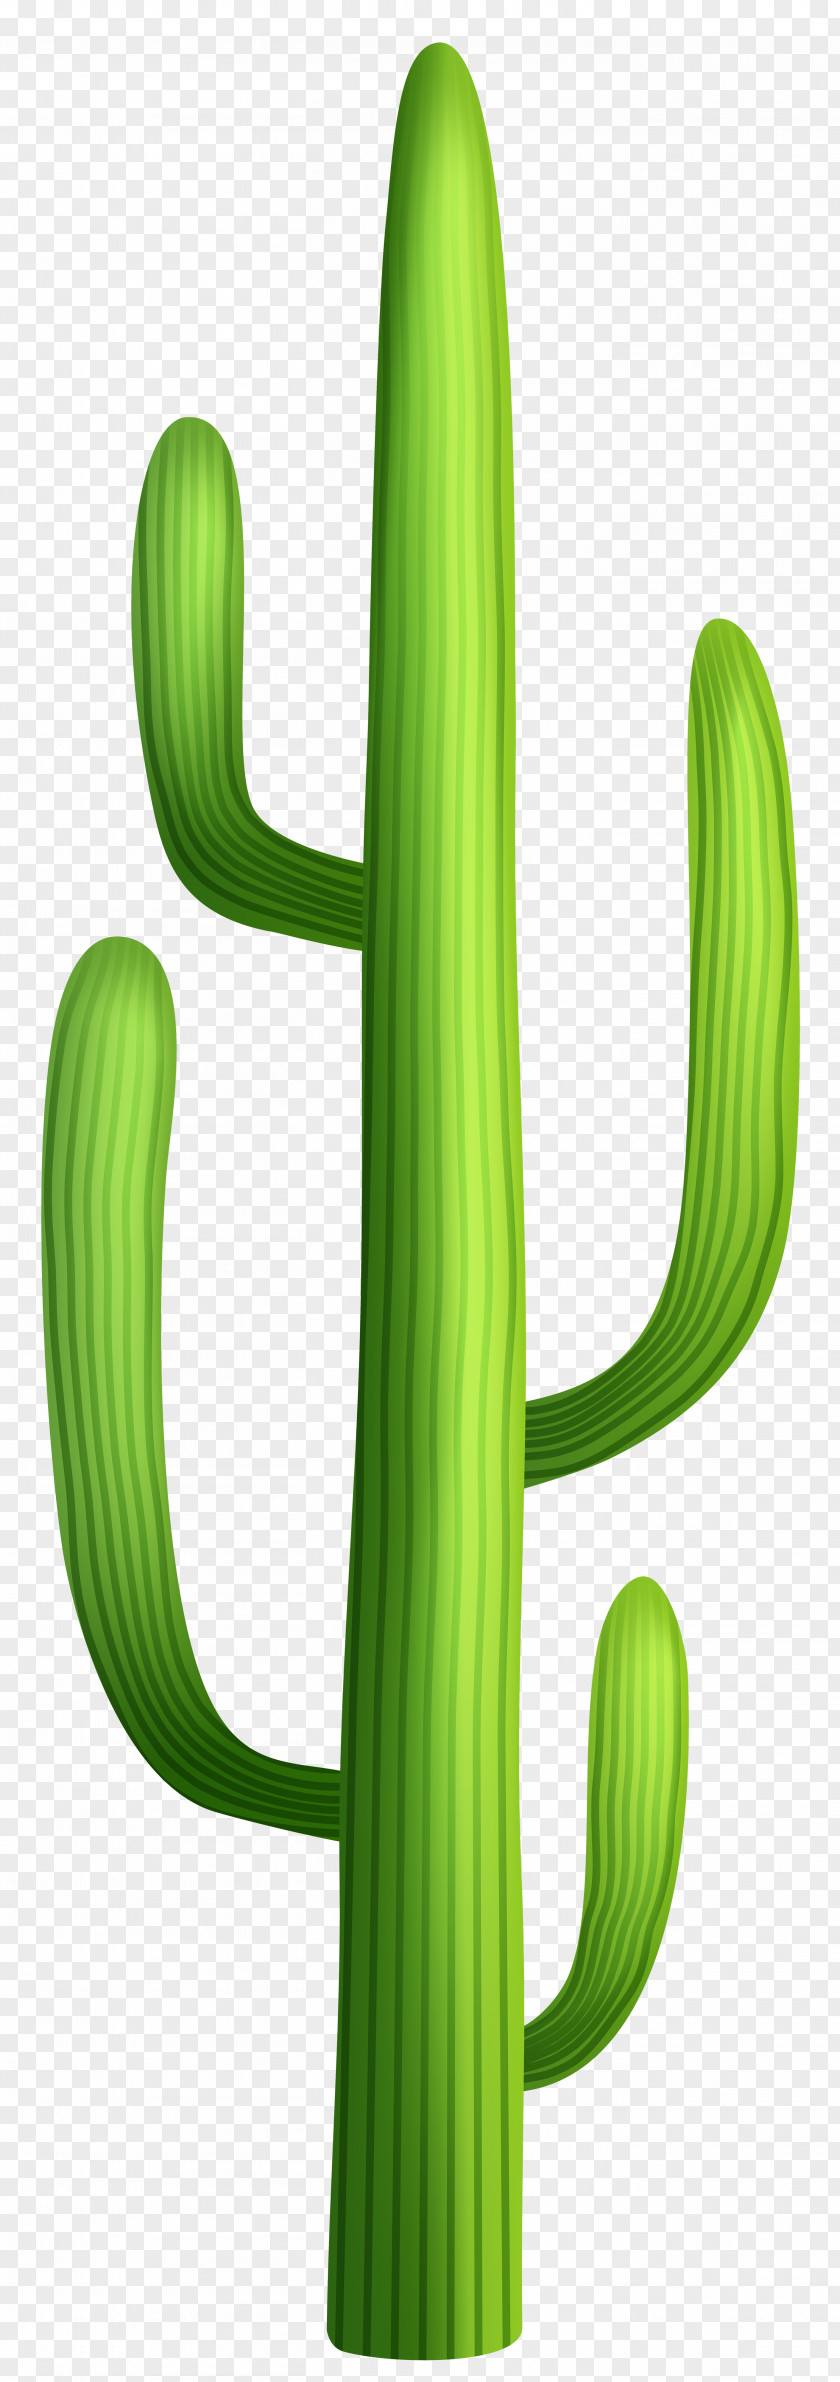 Desert Cactus Transparent Clip Art Image PNG